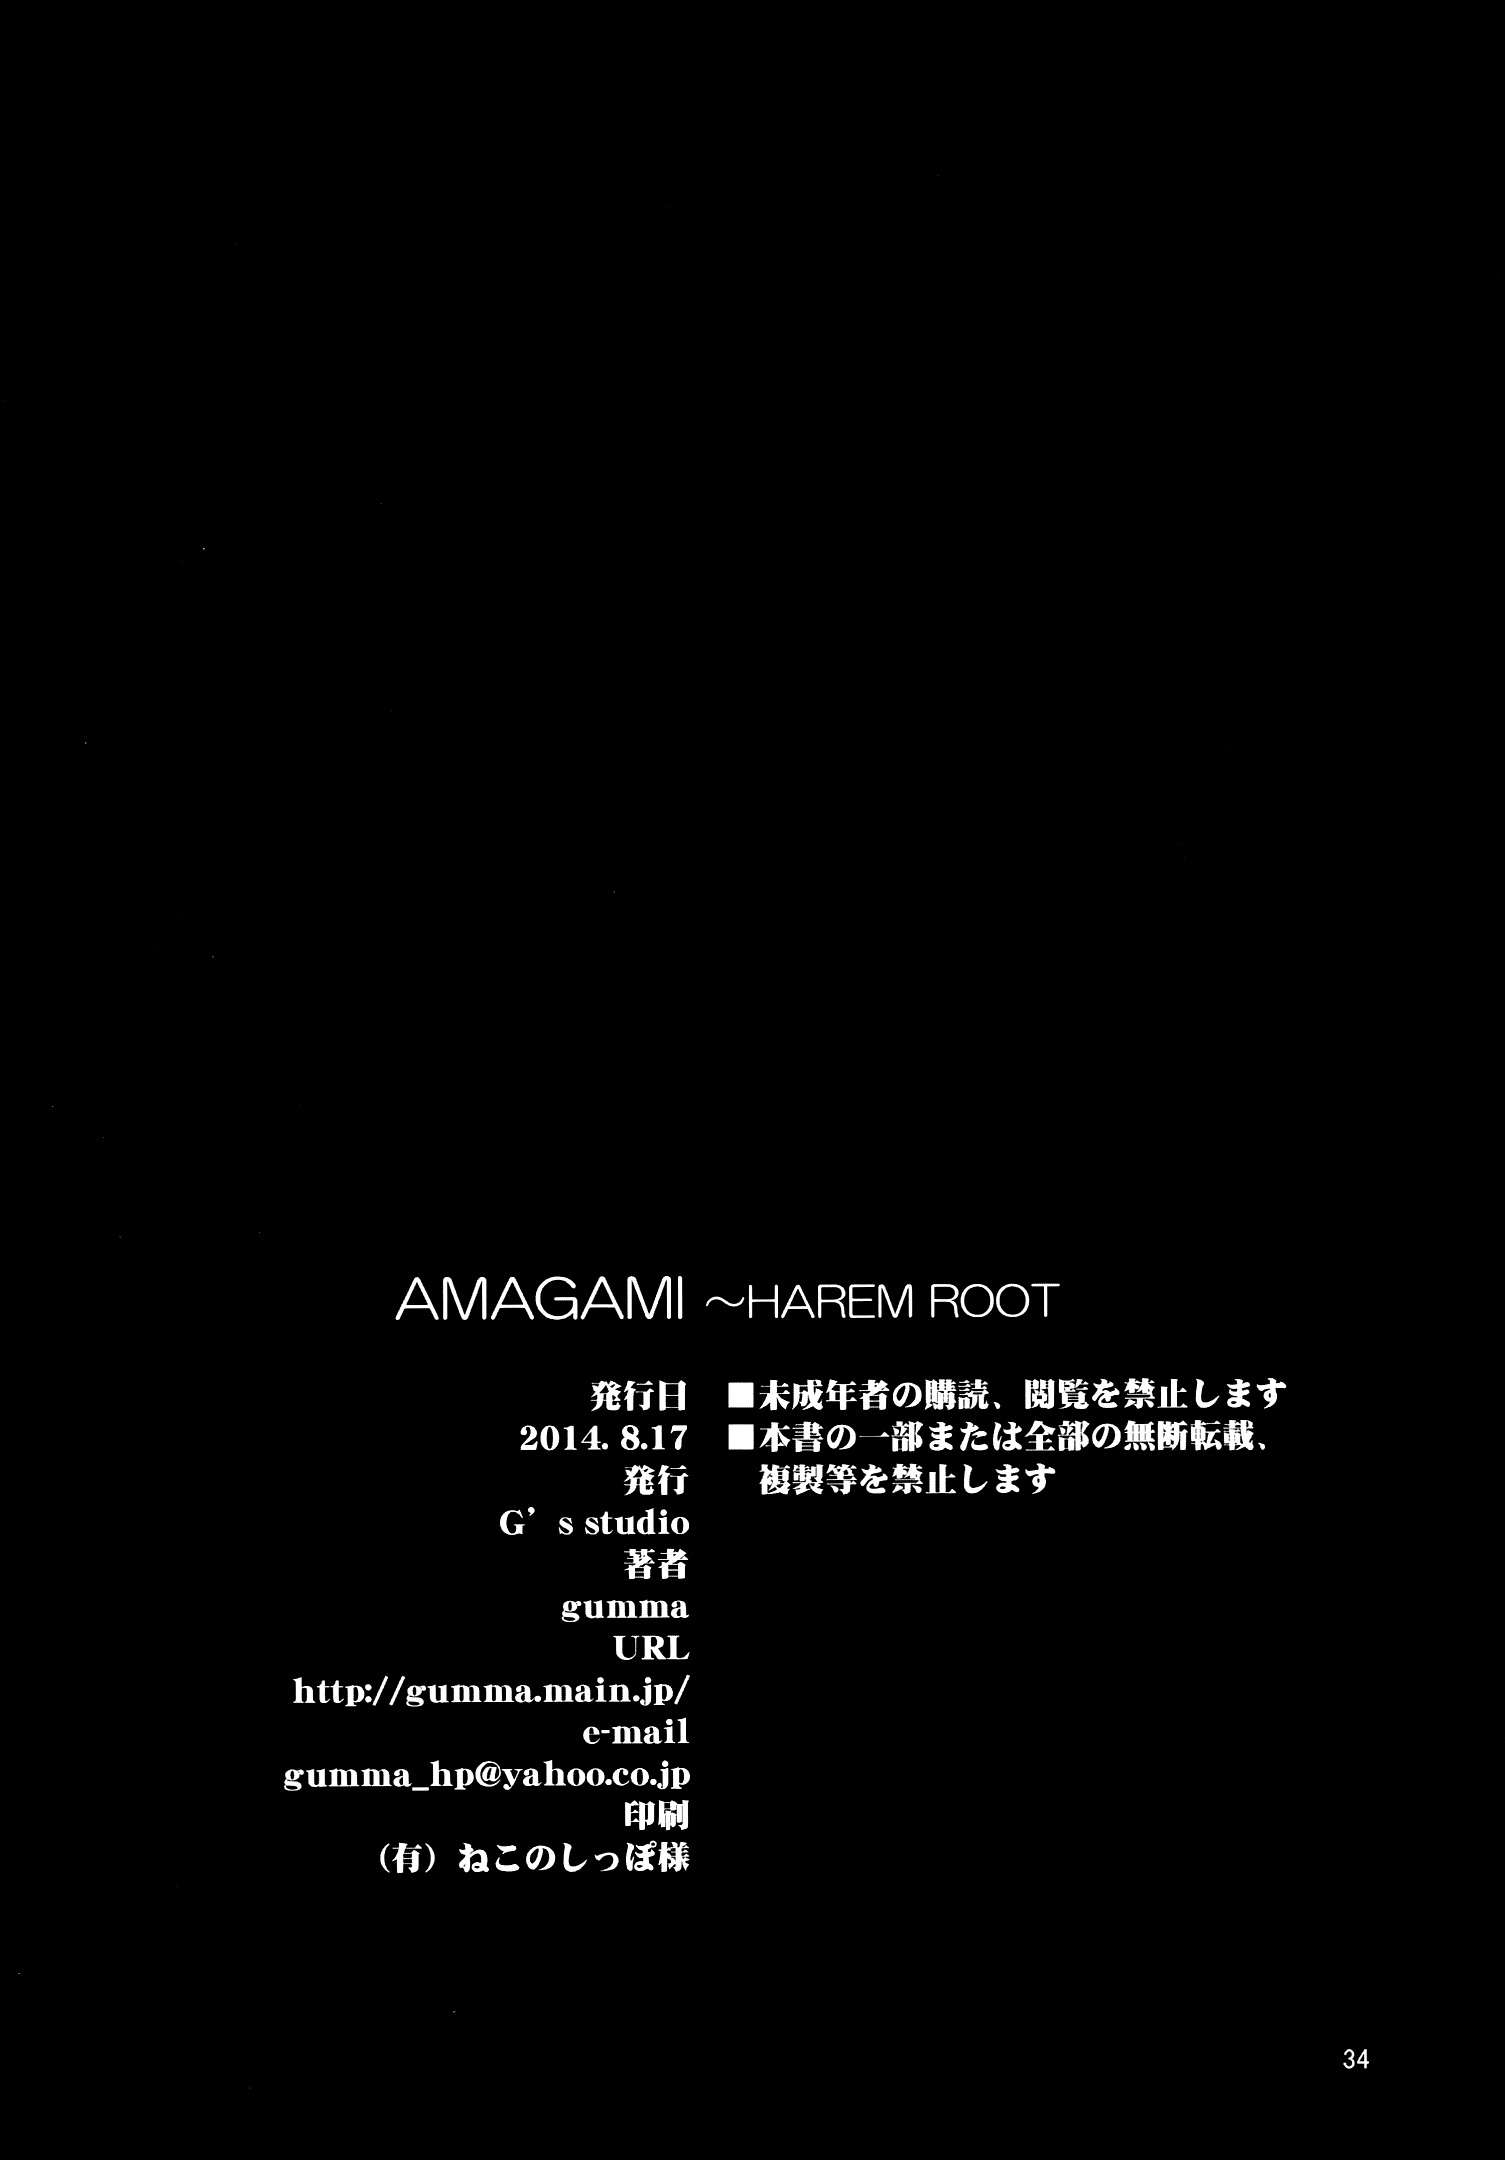 AMAGAMI ~HAREM ROOT Chapter-2 - 12